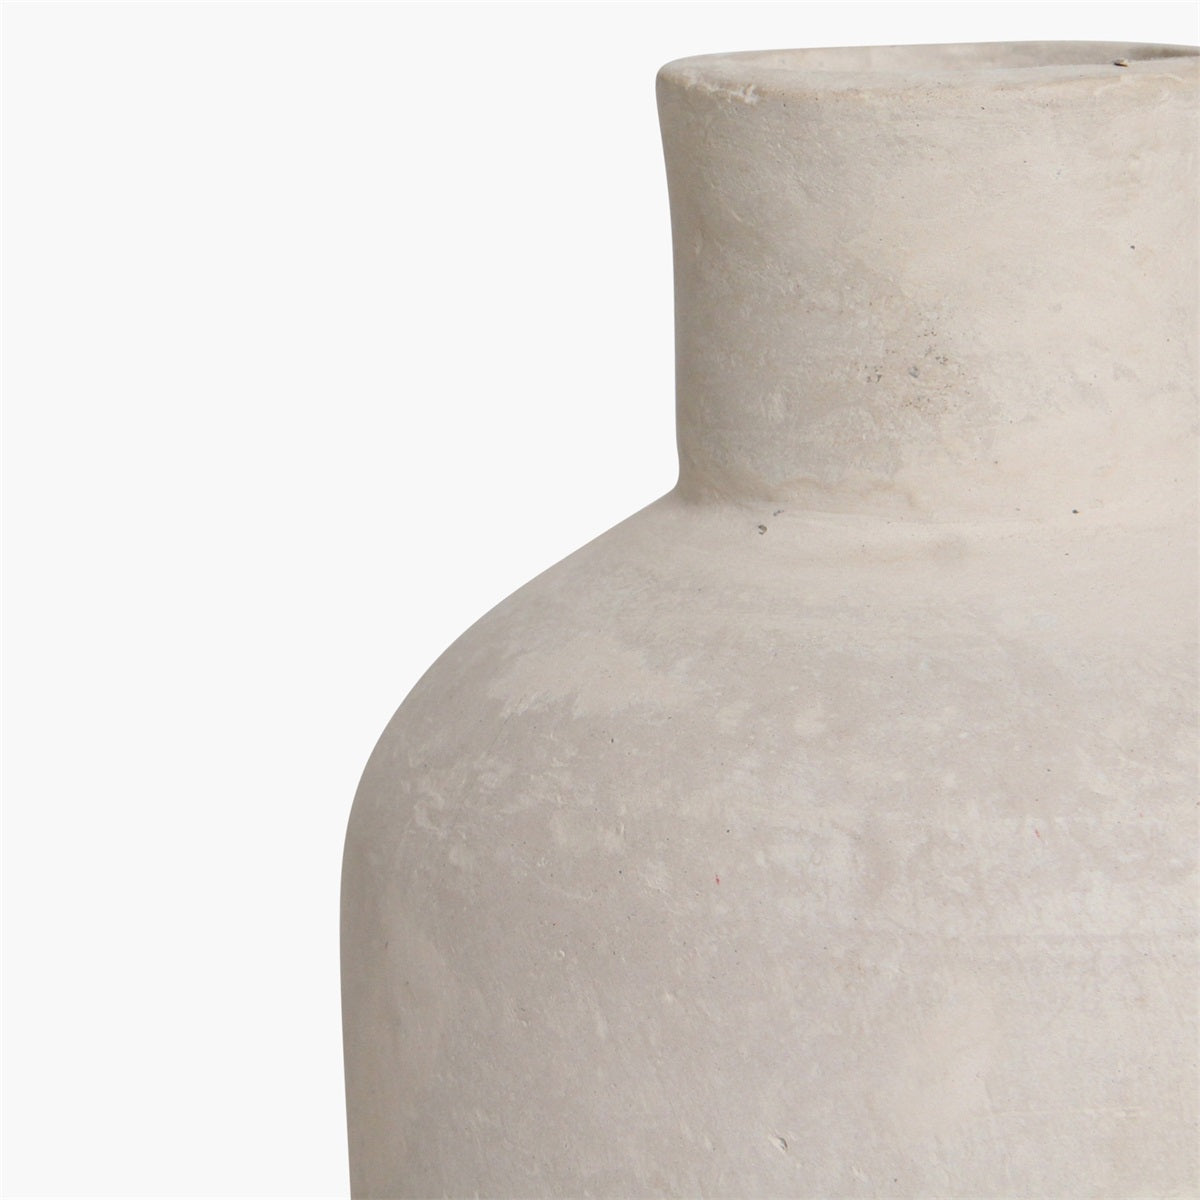 Raw Materials Chalk Vase Kolayat White Papermache and Chalkpowder